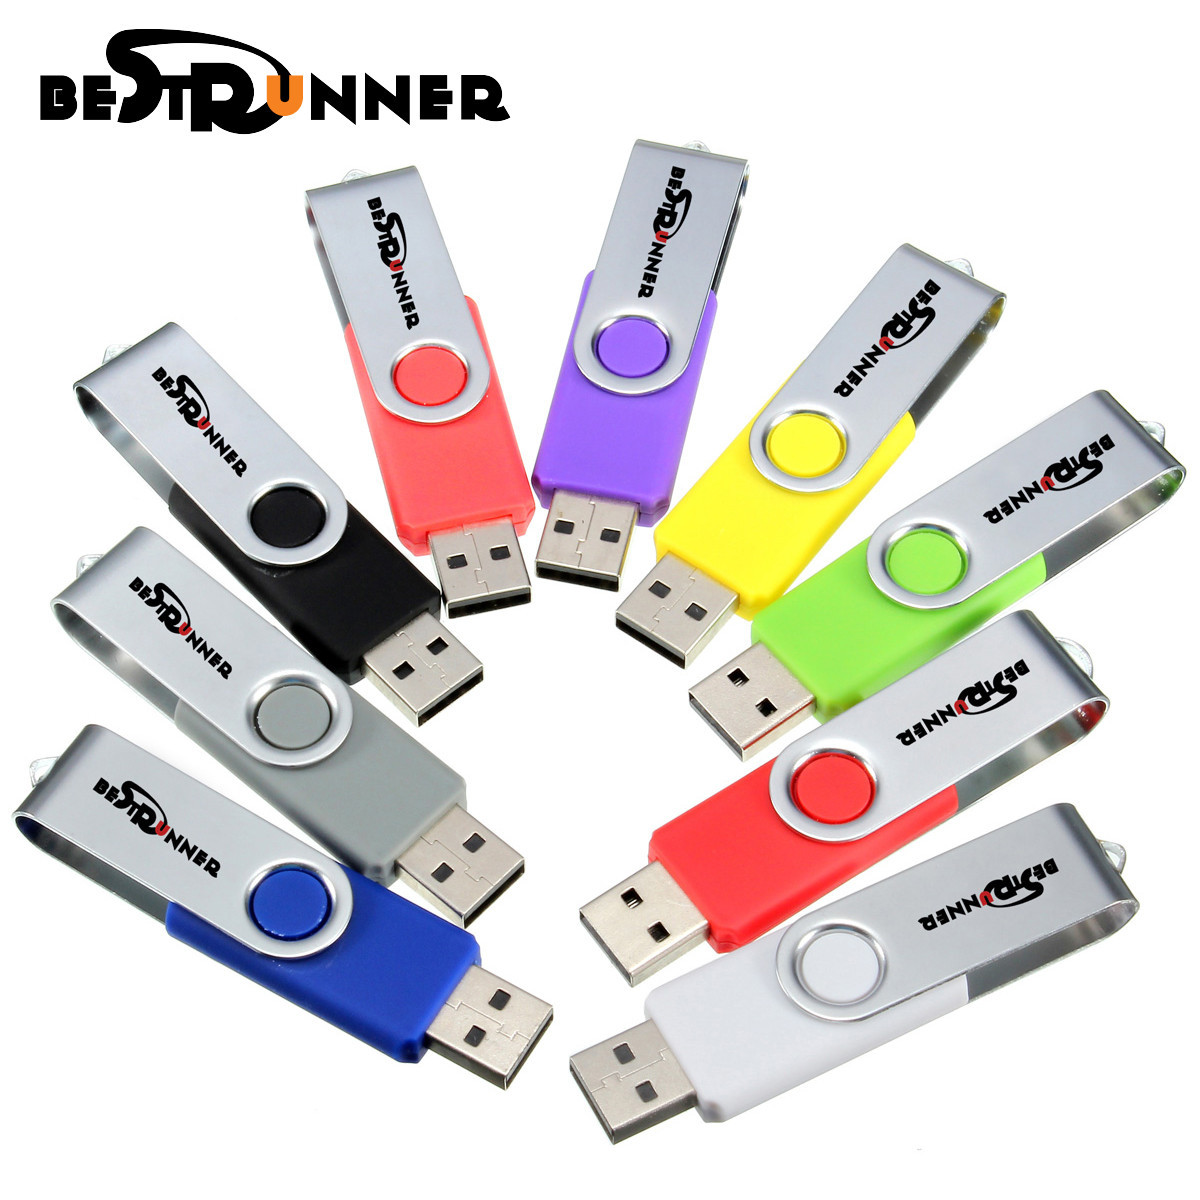 Bestrunner 8GB Foldable USB 2.0 Flash Drive Thumbstick Pen Drive Memory U Disk 23